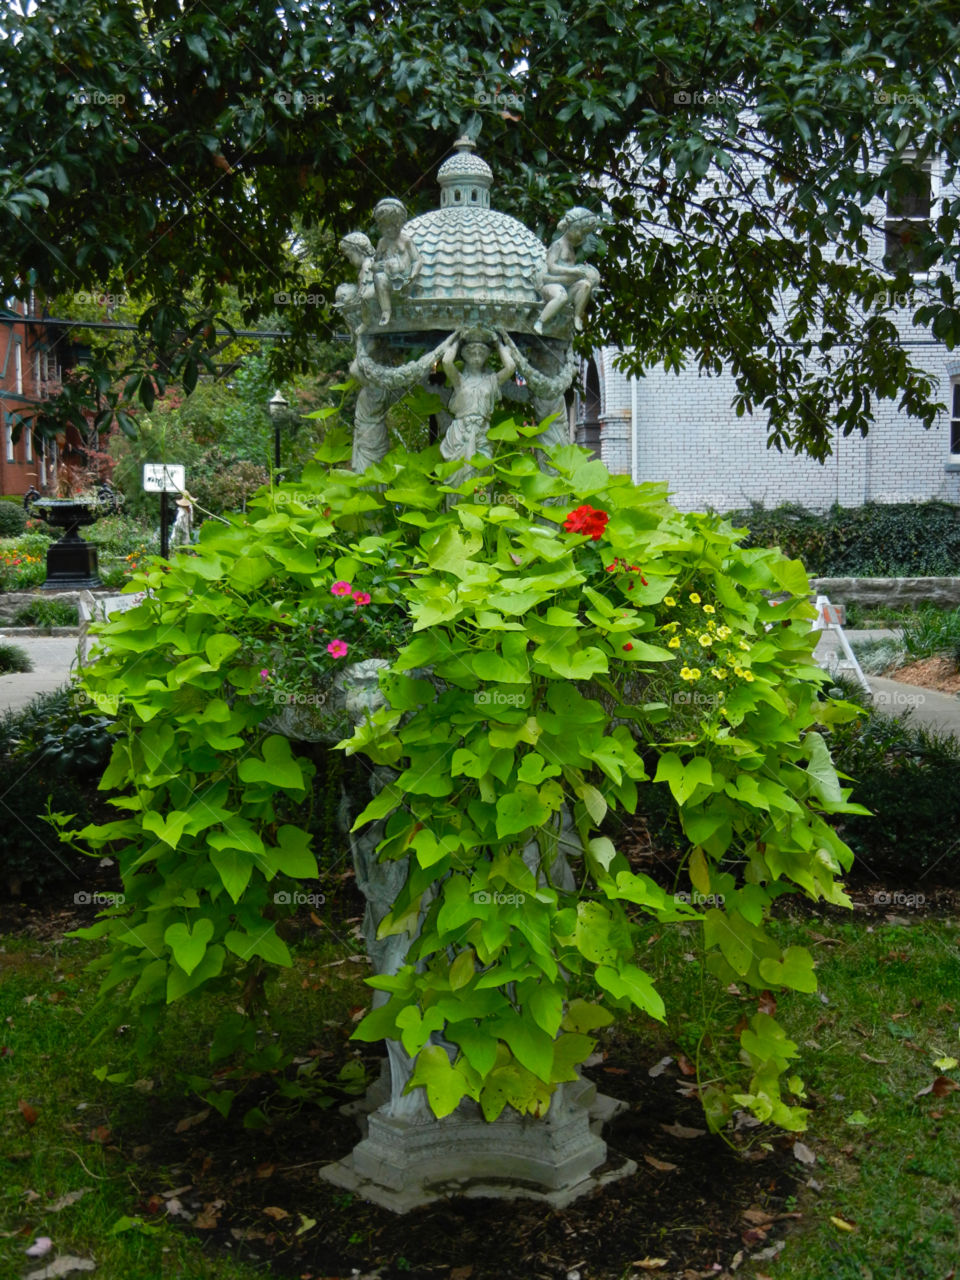 Fountain planter